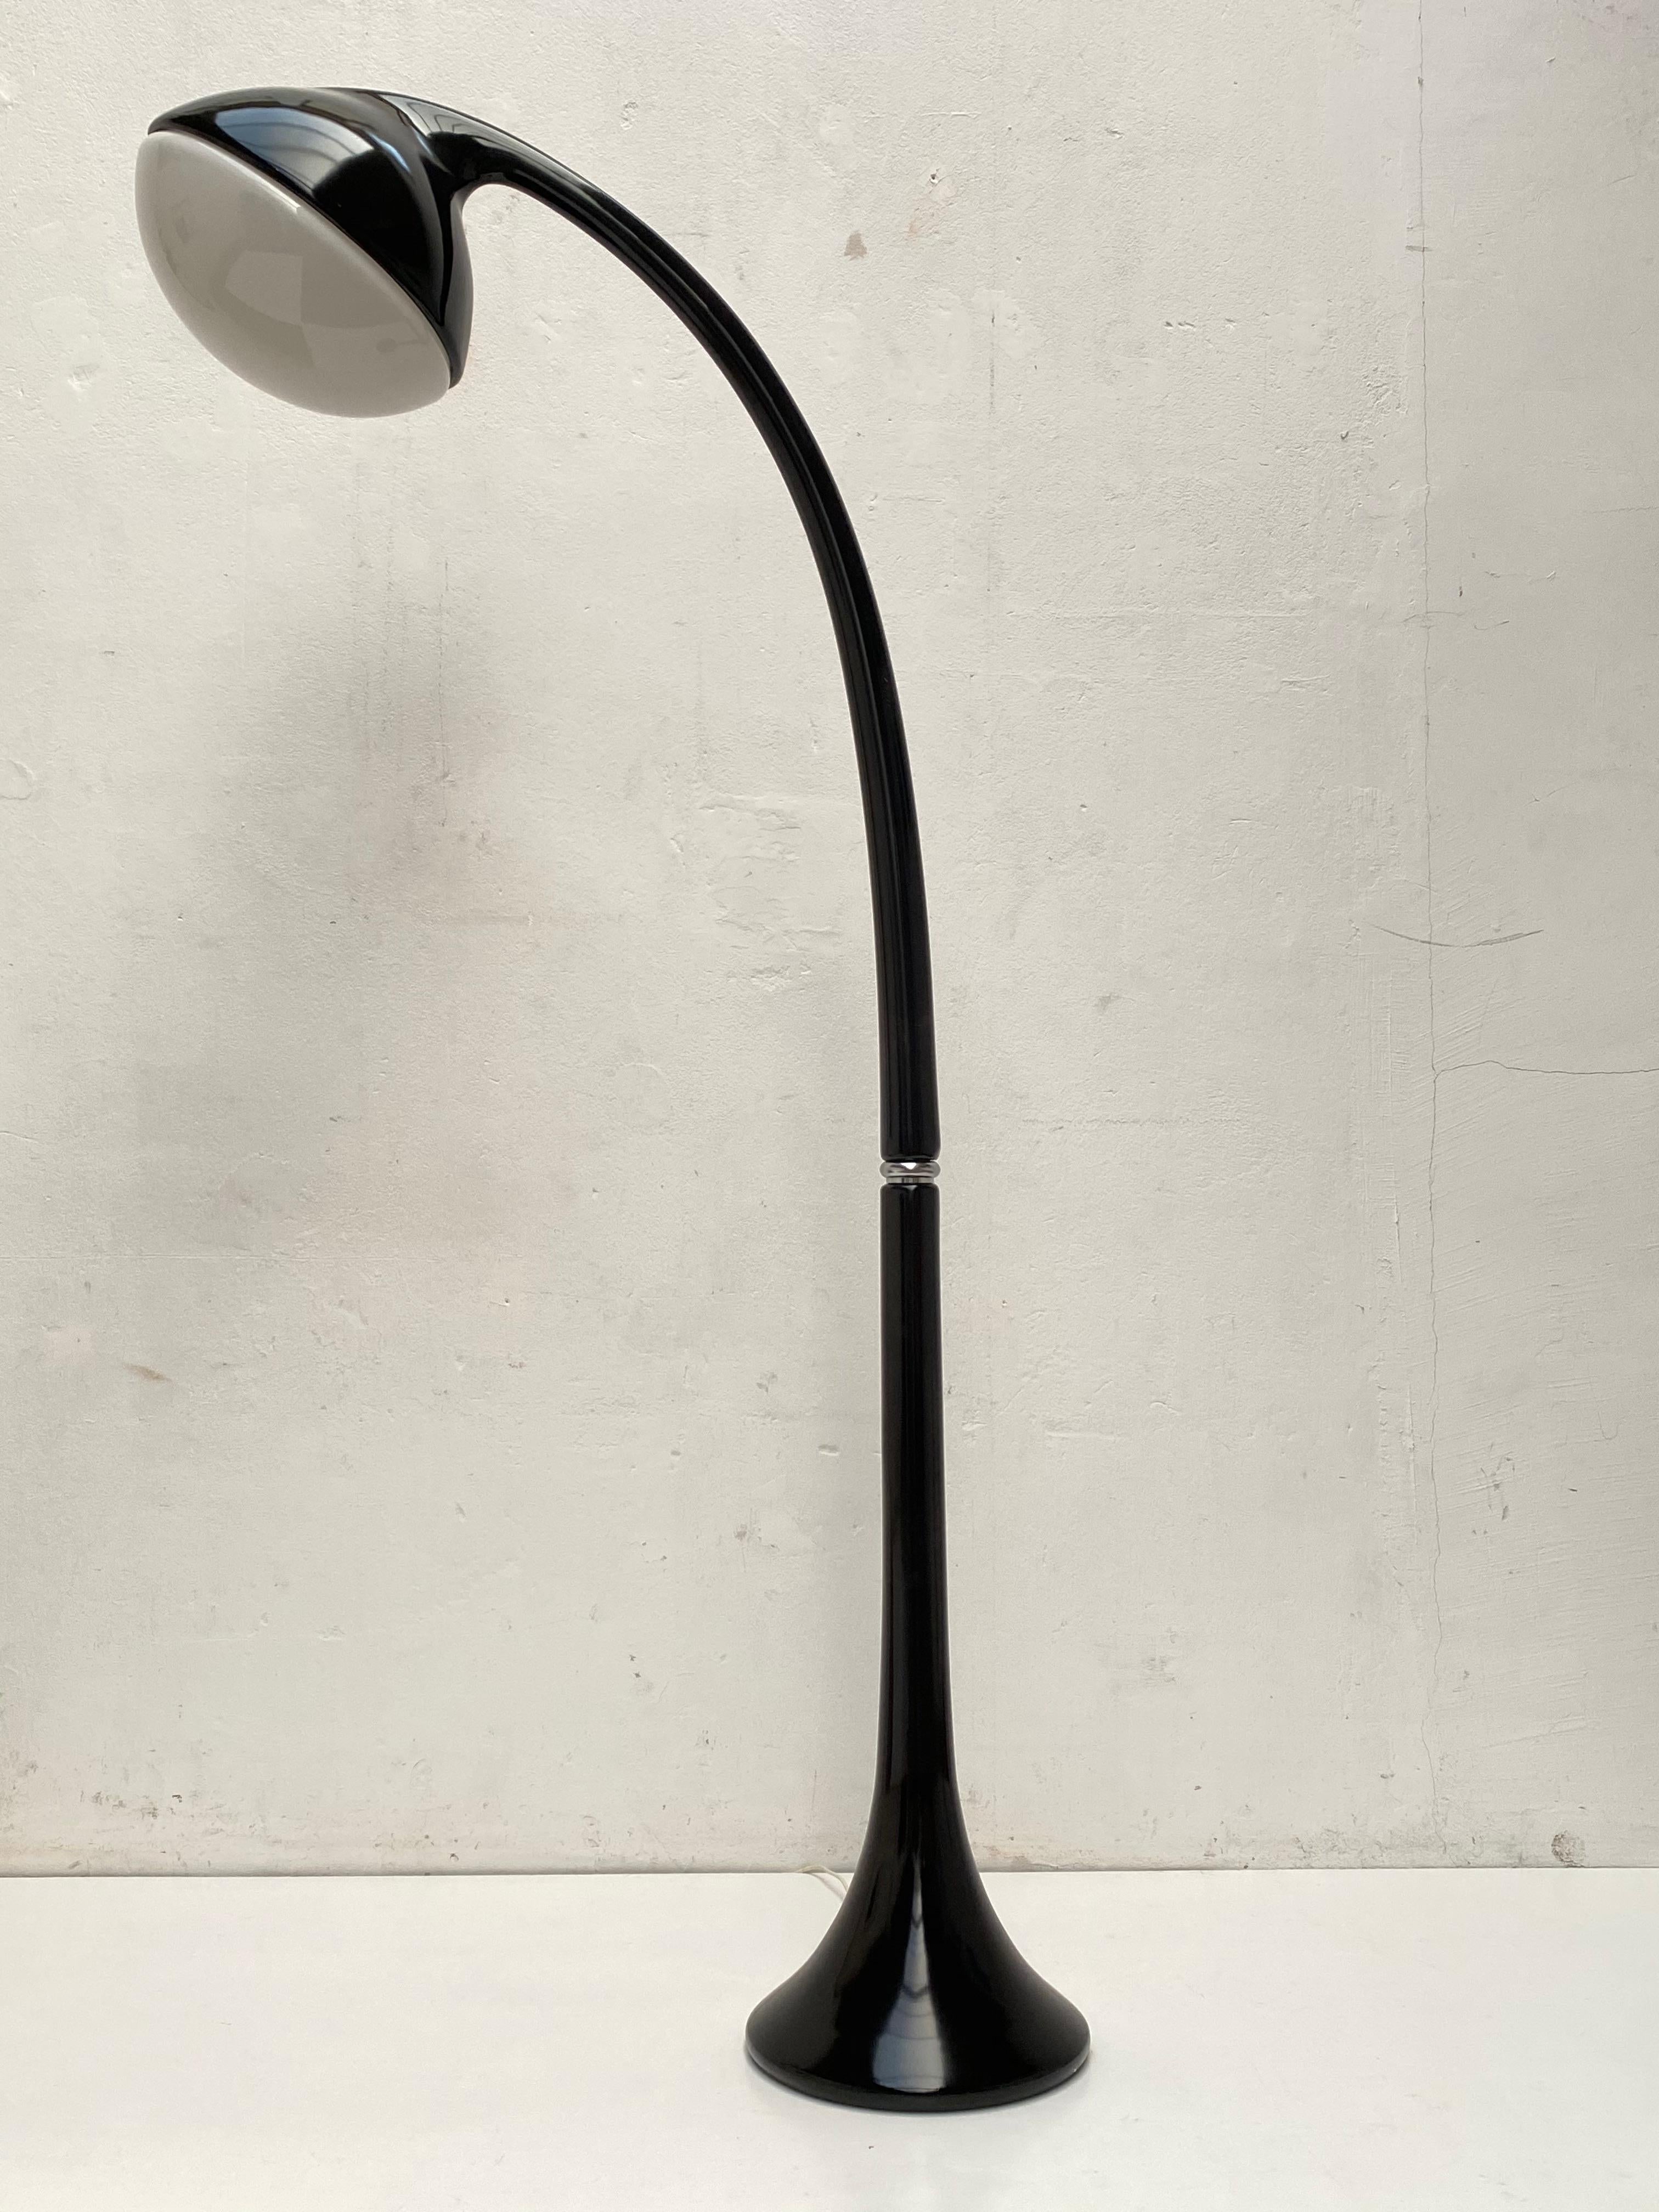 Resin 'Lampione' Floor Lamp by Fabio Lenci for DH Guzzini, Italy, 1968, Original Label